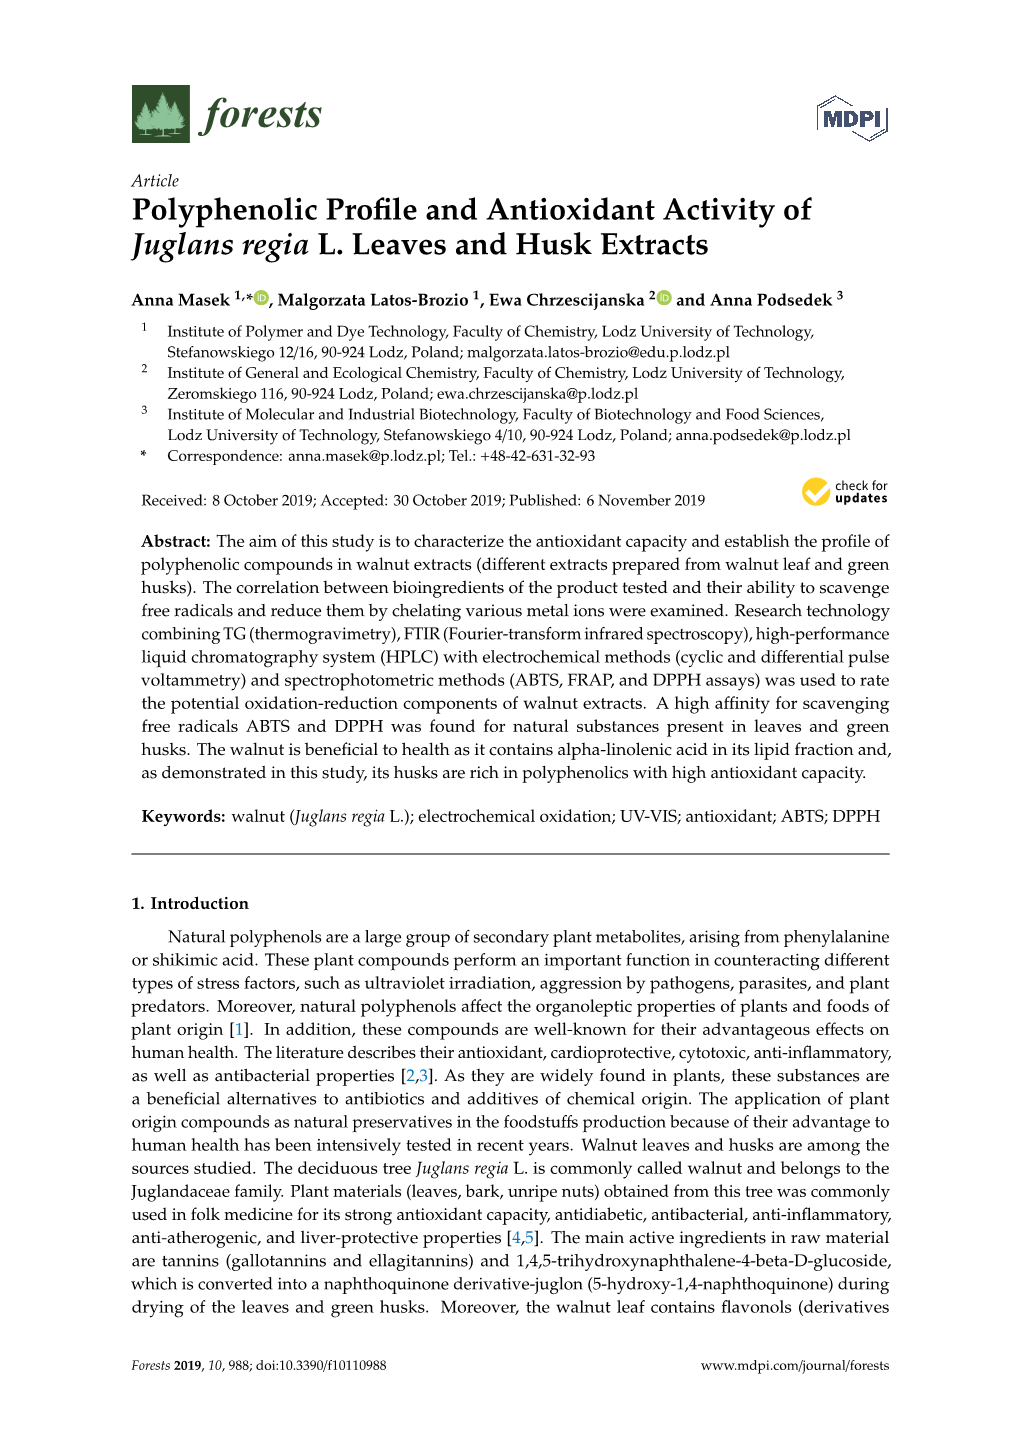 Polyphenolic Profile and Antioxidant Activity of Juglans Regia L. Leaves